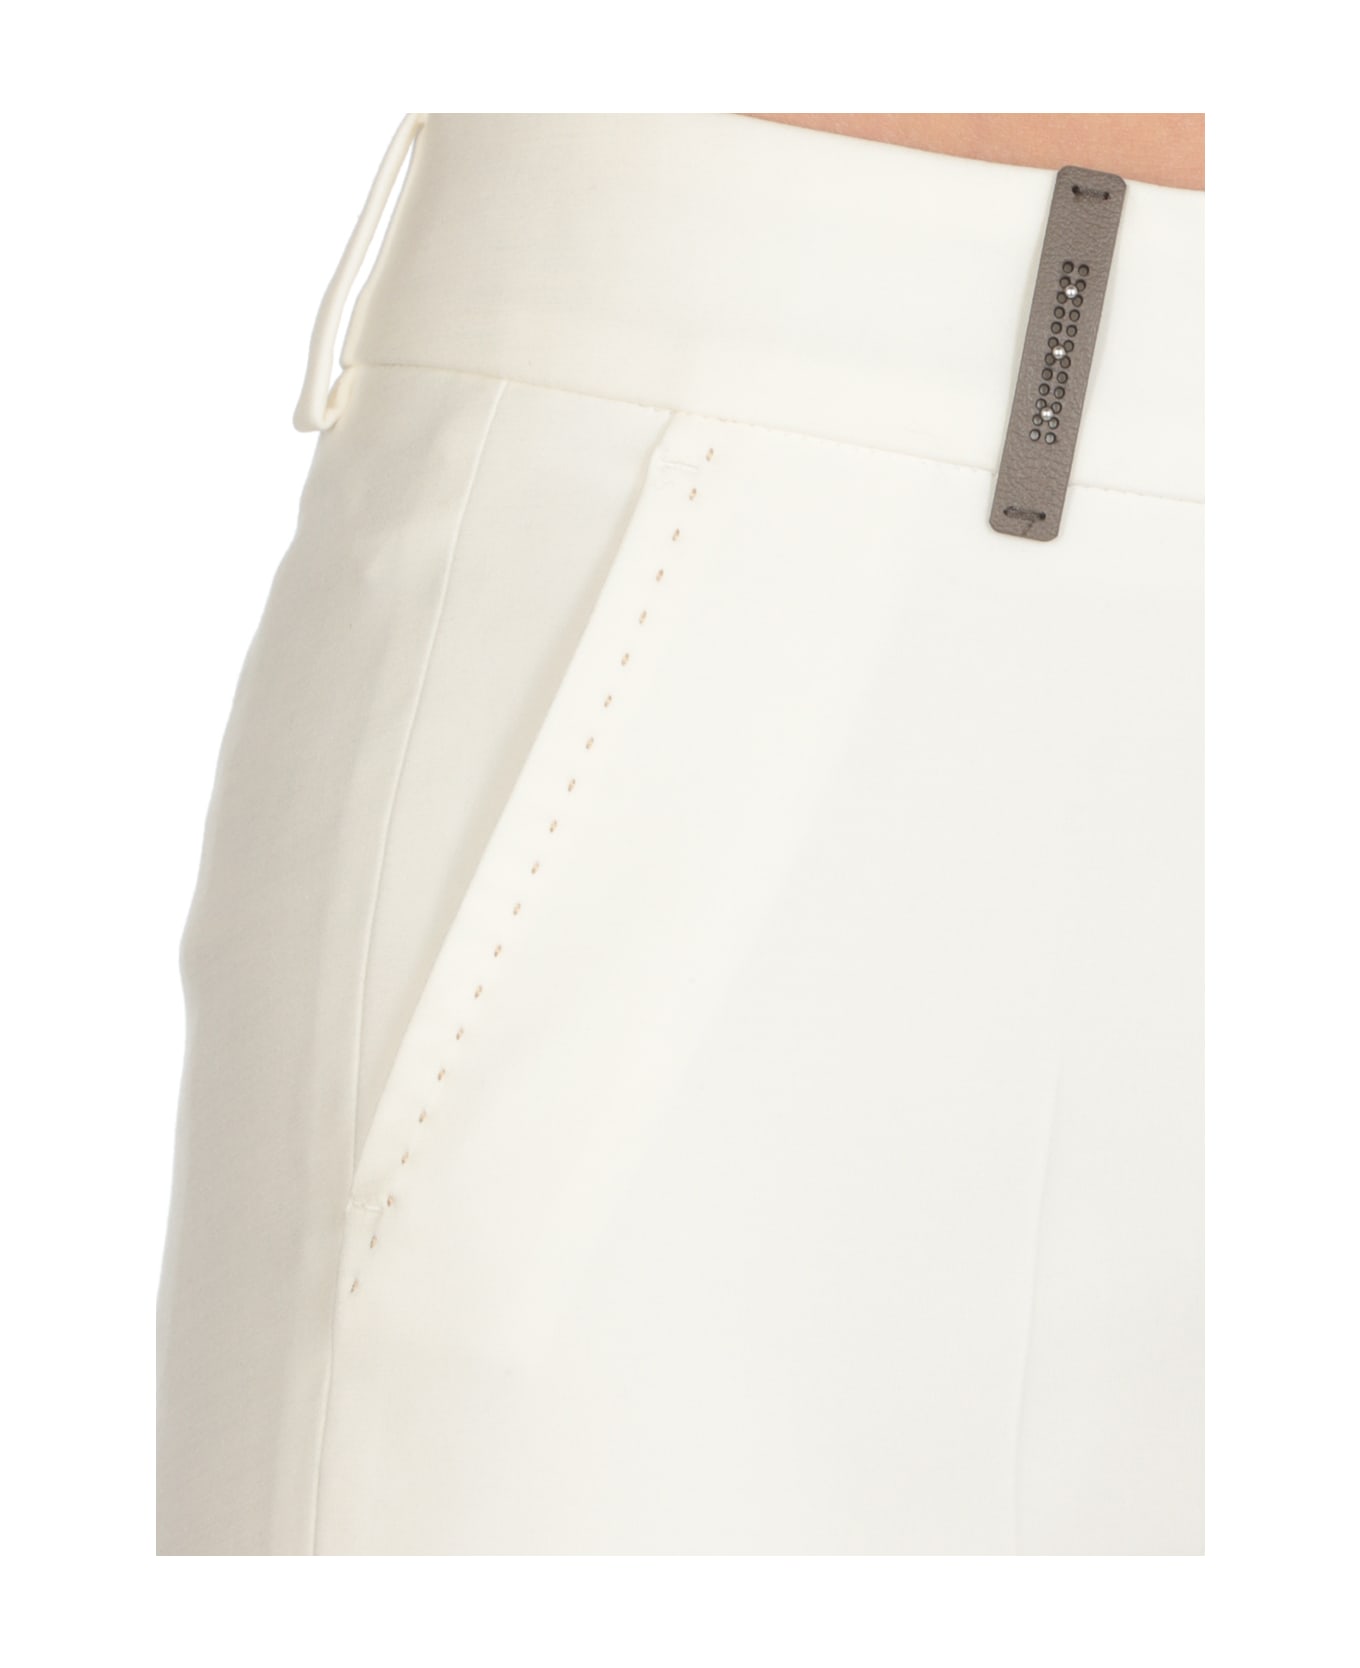 Peserico Cotton Trousers - White ボトムス